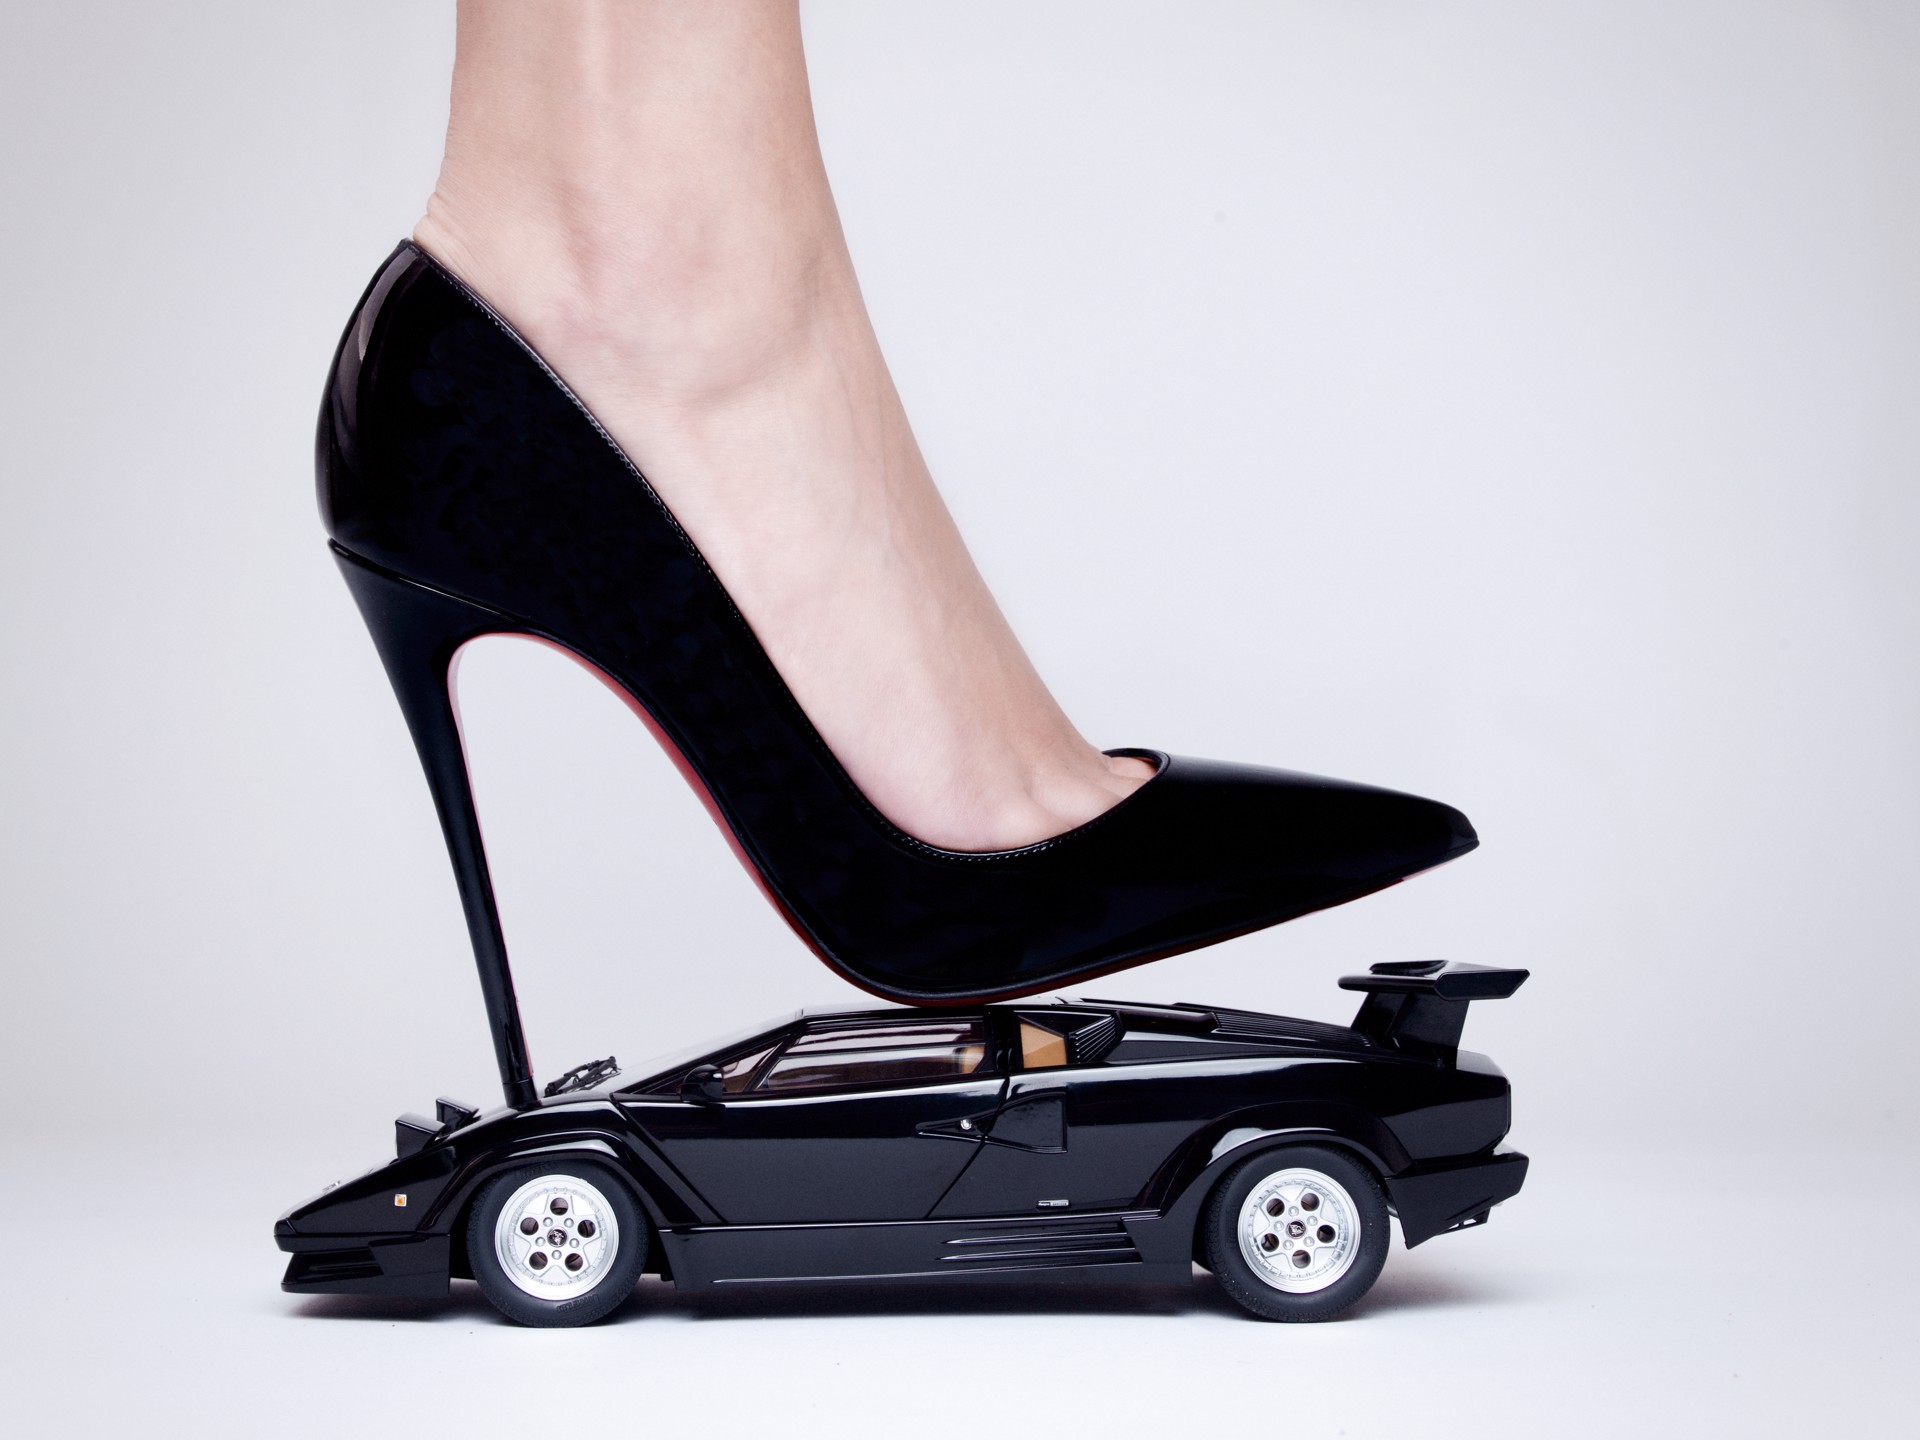 Lamborghini High Heel (AP2) by Tyler Shields